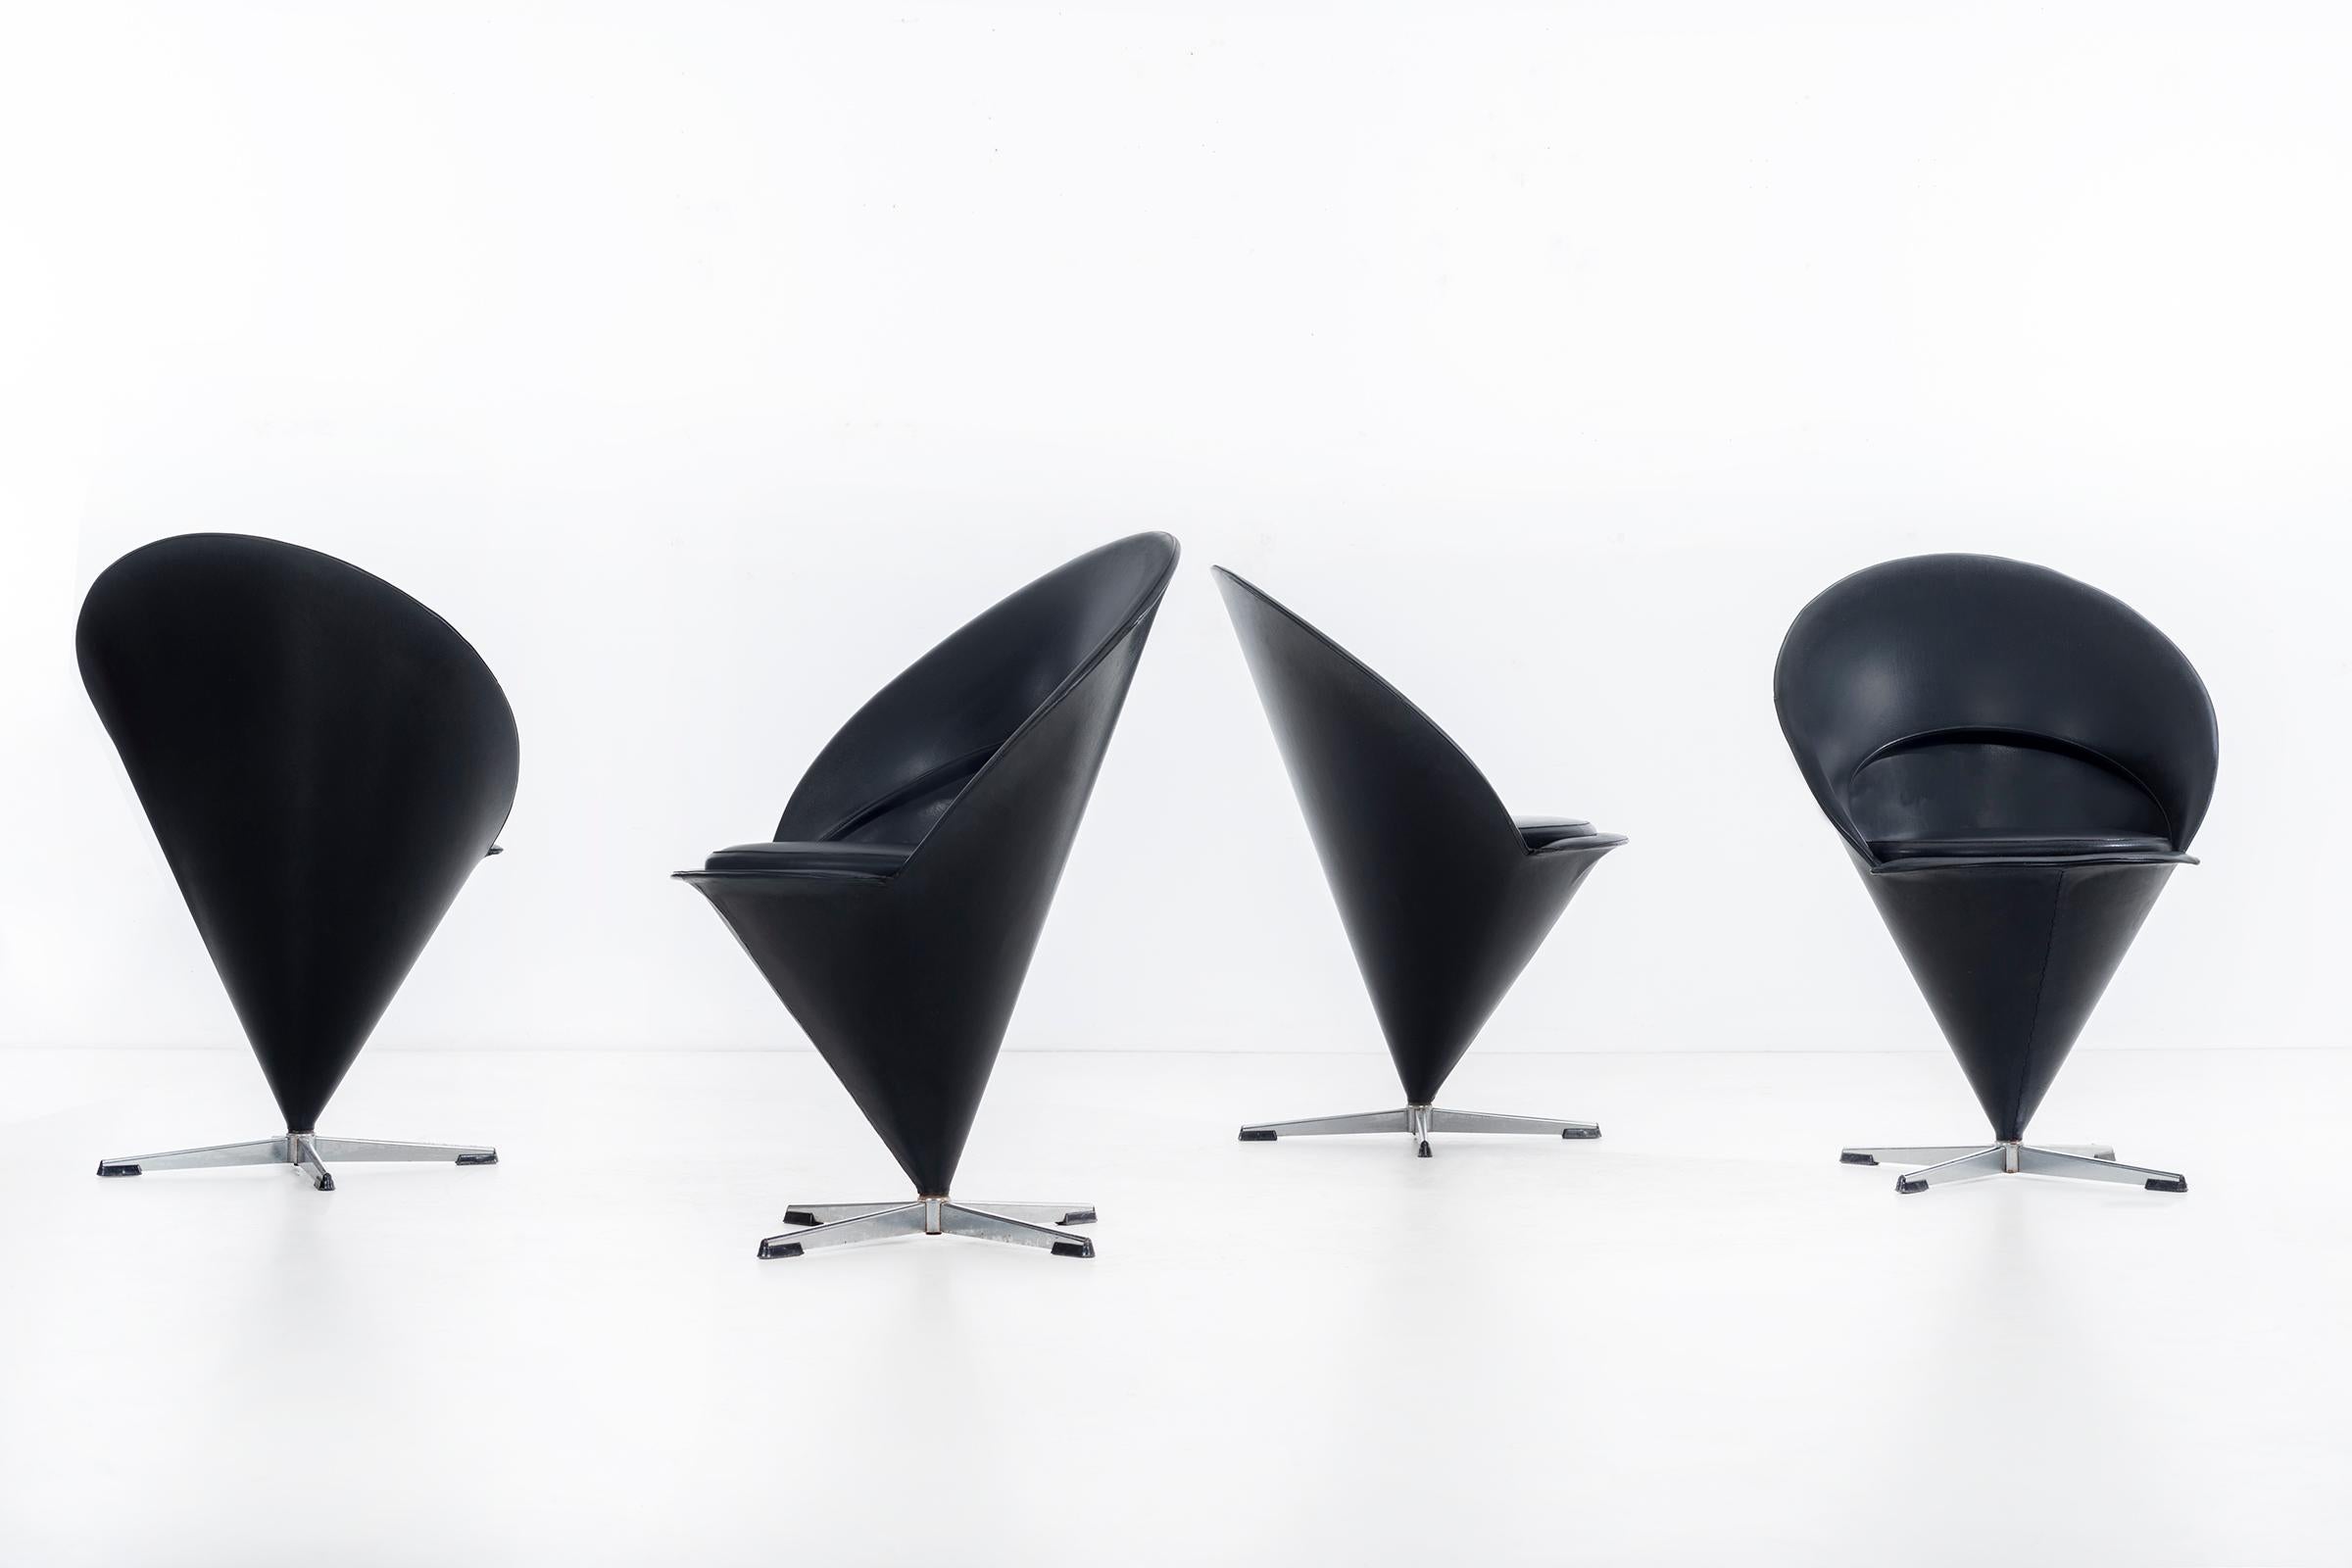 Verner Panton Cone chairs, set of 4 original black vinyl with black leather seats.
Manufacturers Frem Røjle stamped underside of seats.